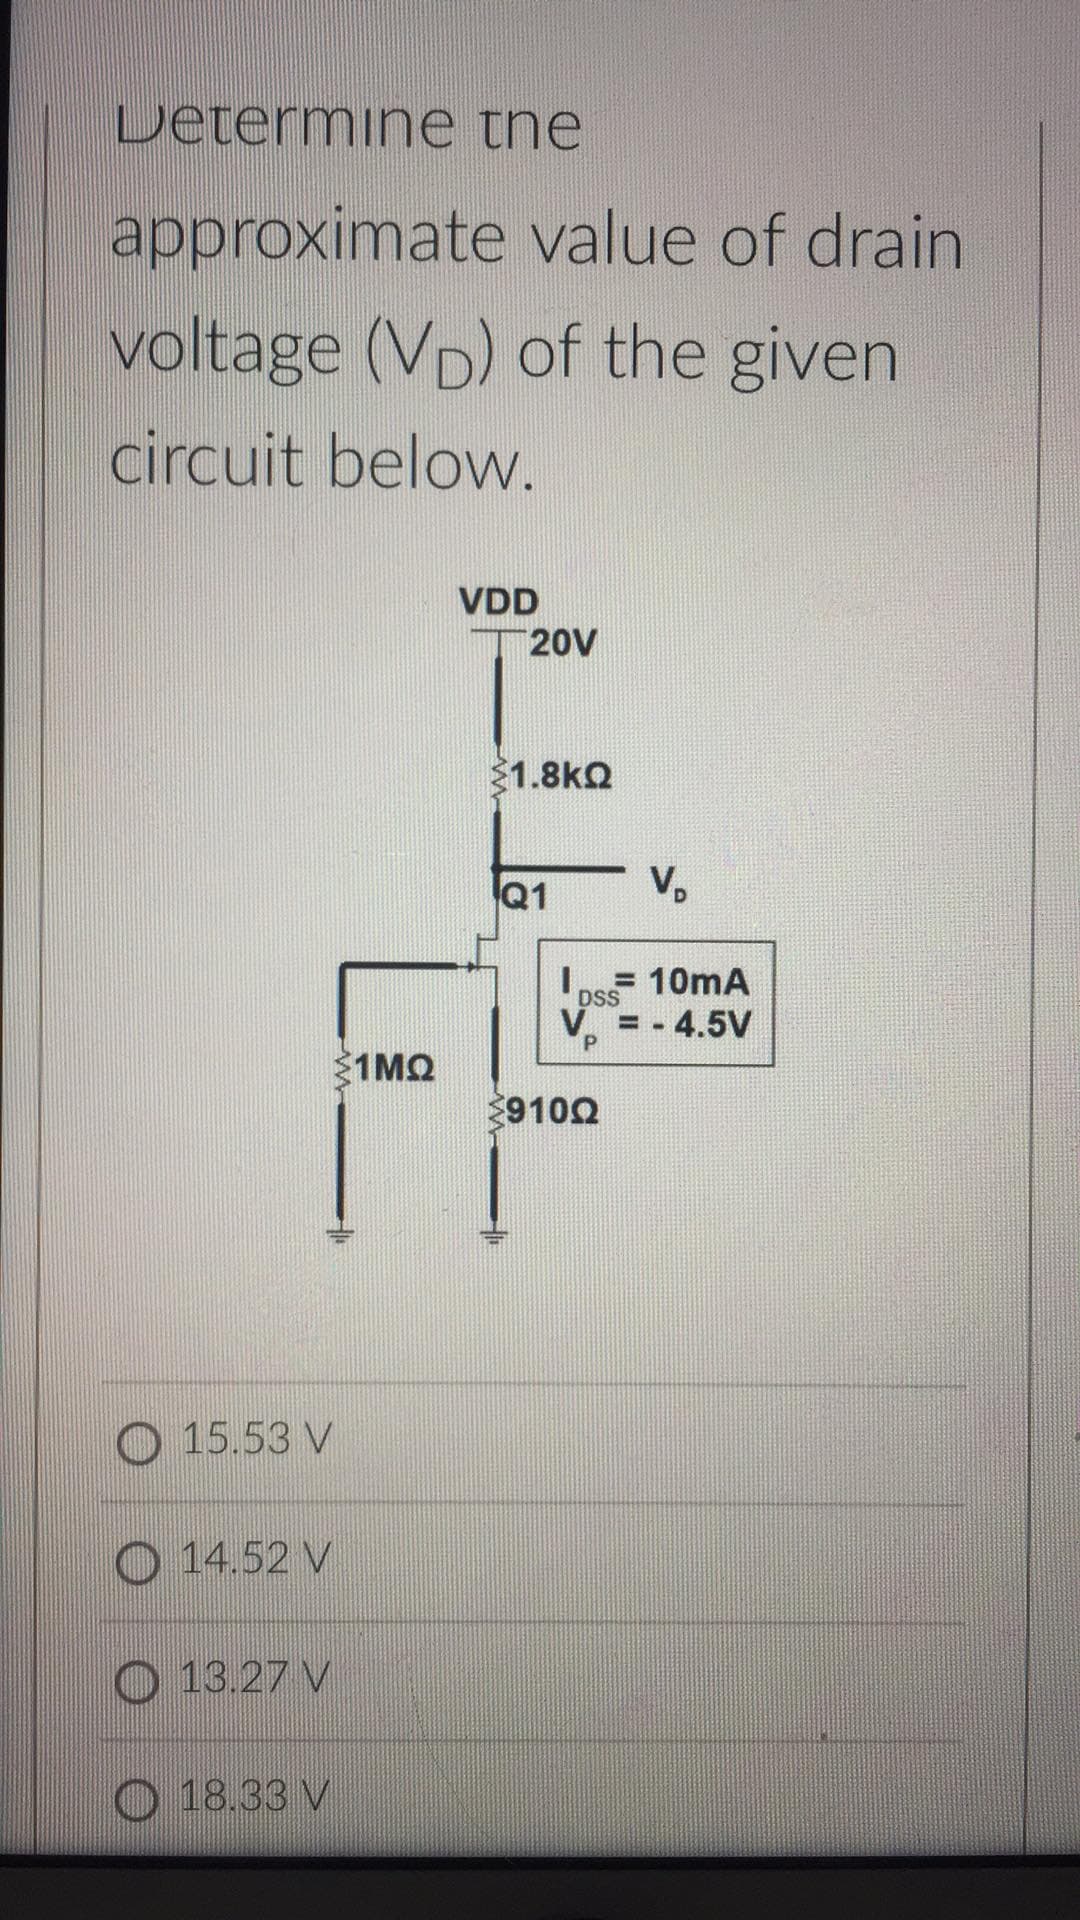 Determine the
approximate value of drain
voltage (VD) of the given
circuit below.
VDD
20V
1.8kQ
Q1
V.
=10mA
DSS
= - 4.5V
1MQ
9100
O 15.53 V
O 14.52 V
O 13.27 V
O 18.33 V
